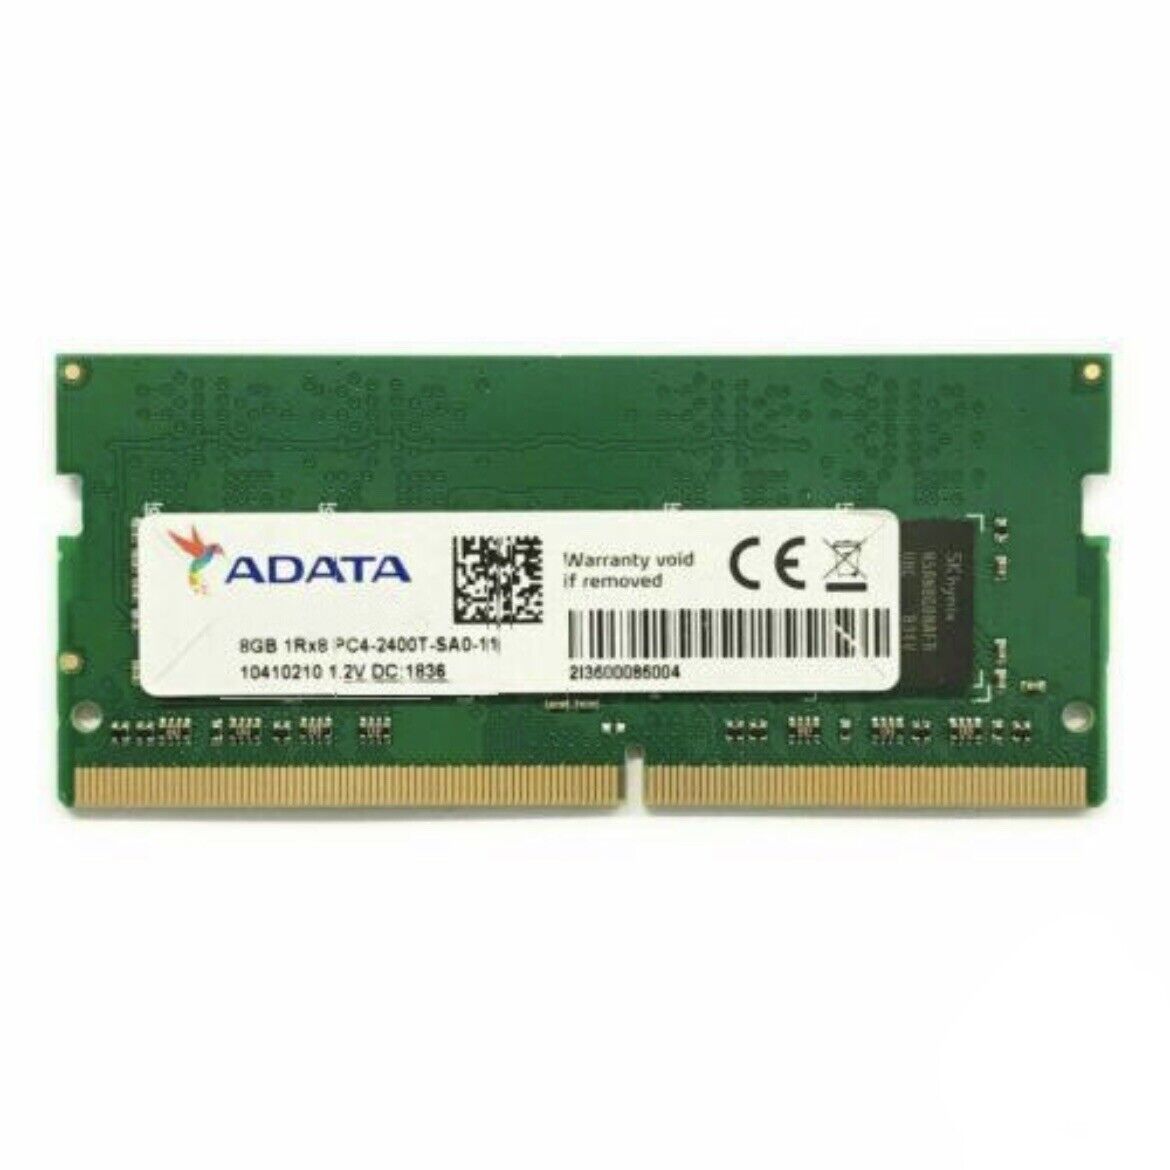 ADATA 8GB 1Rx8 PC4-2400T-SA0-11 DDR4 SODIMM SDRAM RAM AM1P24HC8T1-BURS